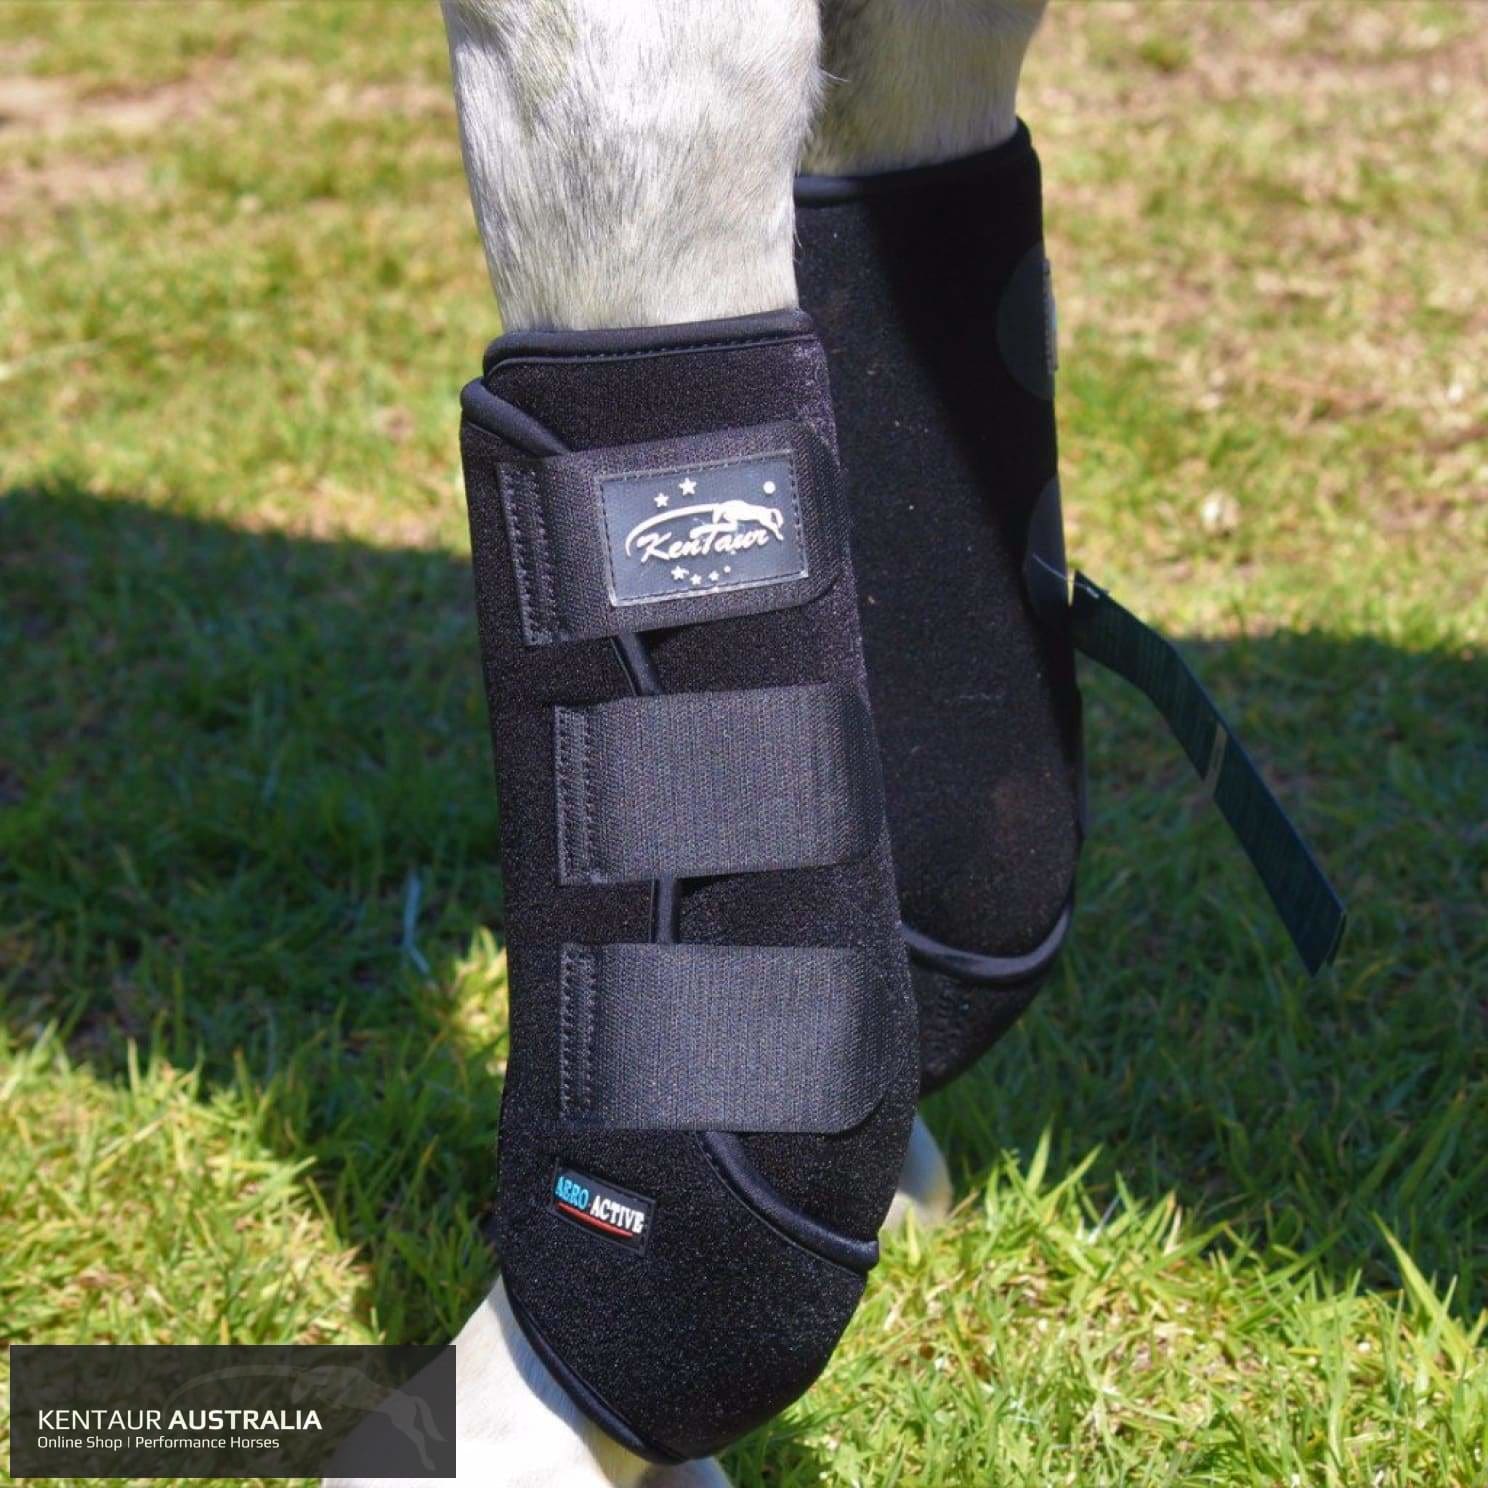 Kentaur ‘Velcro’ Hind Dressage Boots Black / Full dressage boots